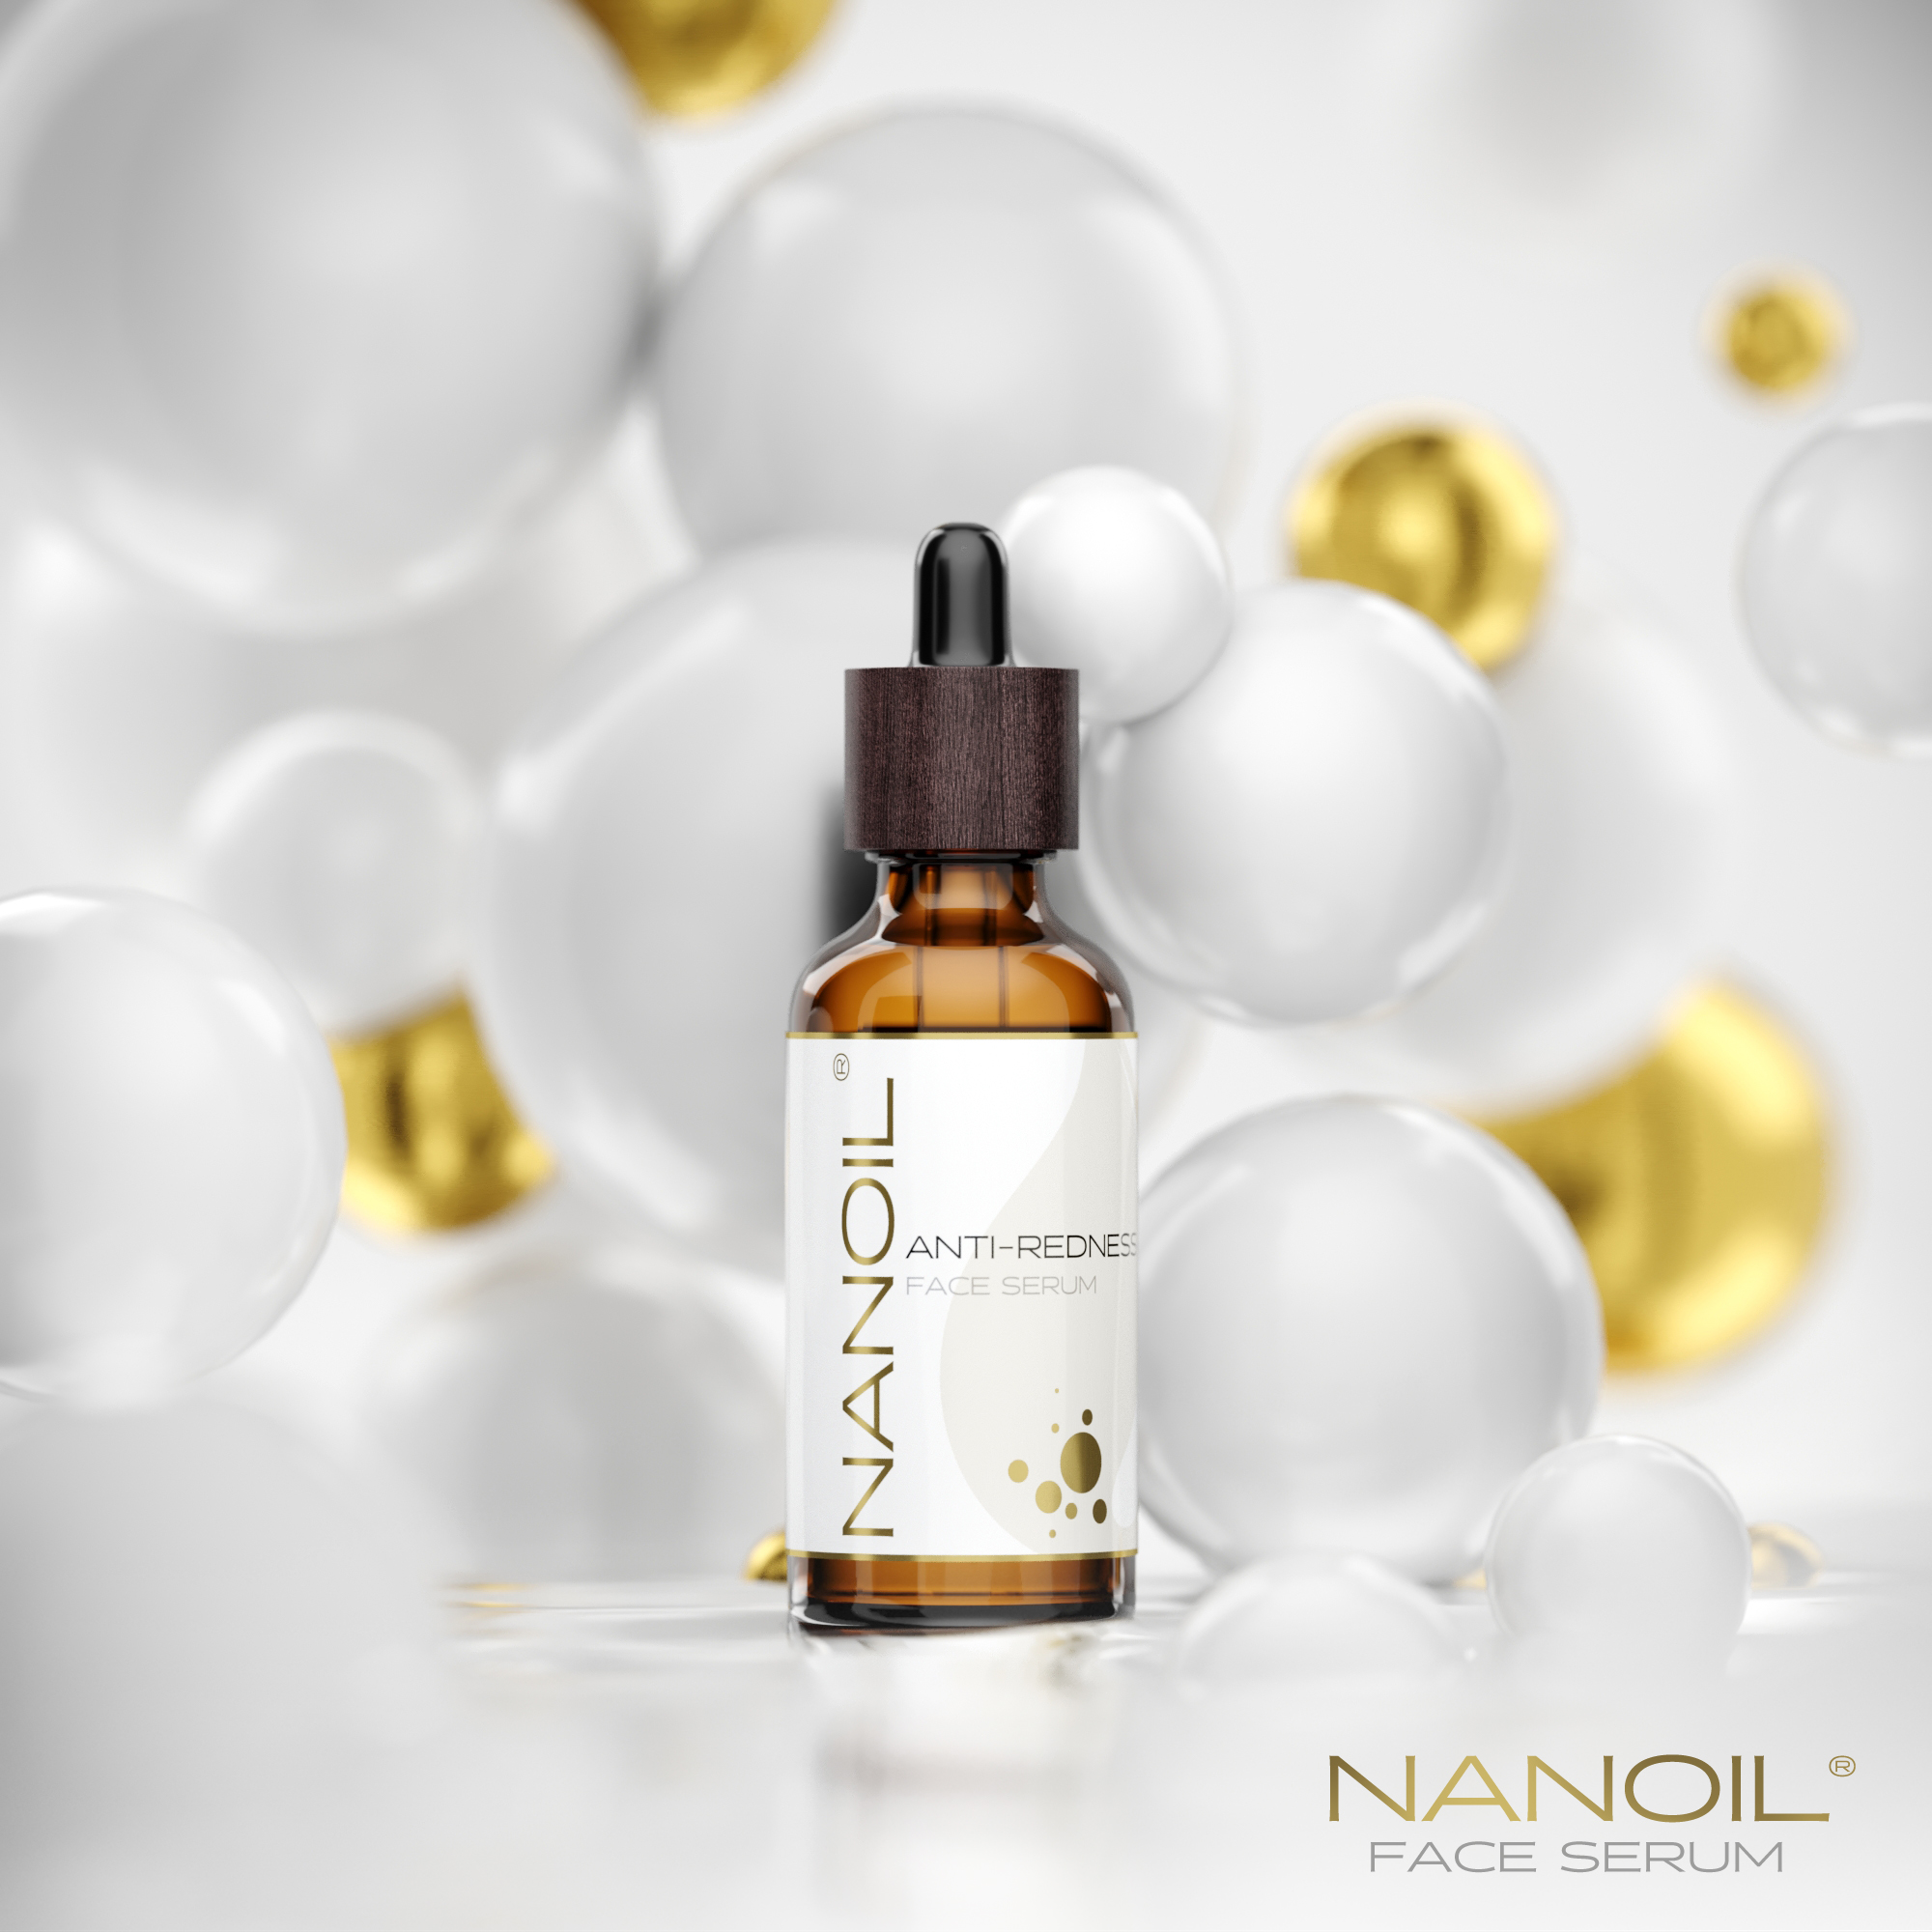 Nanoil the best anti-redness face serum